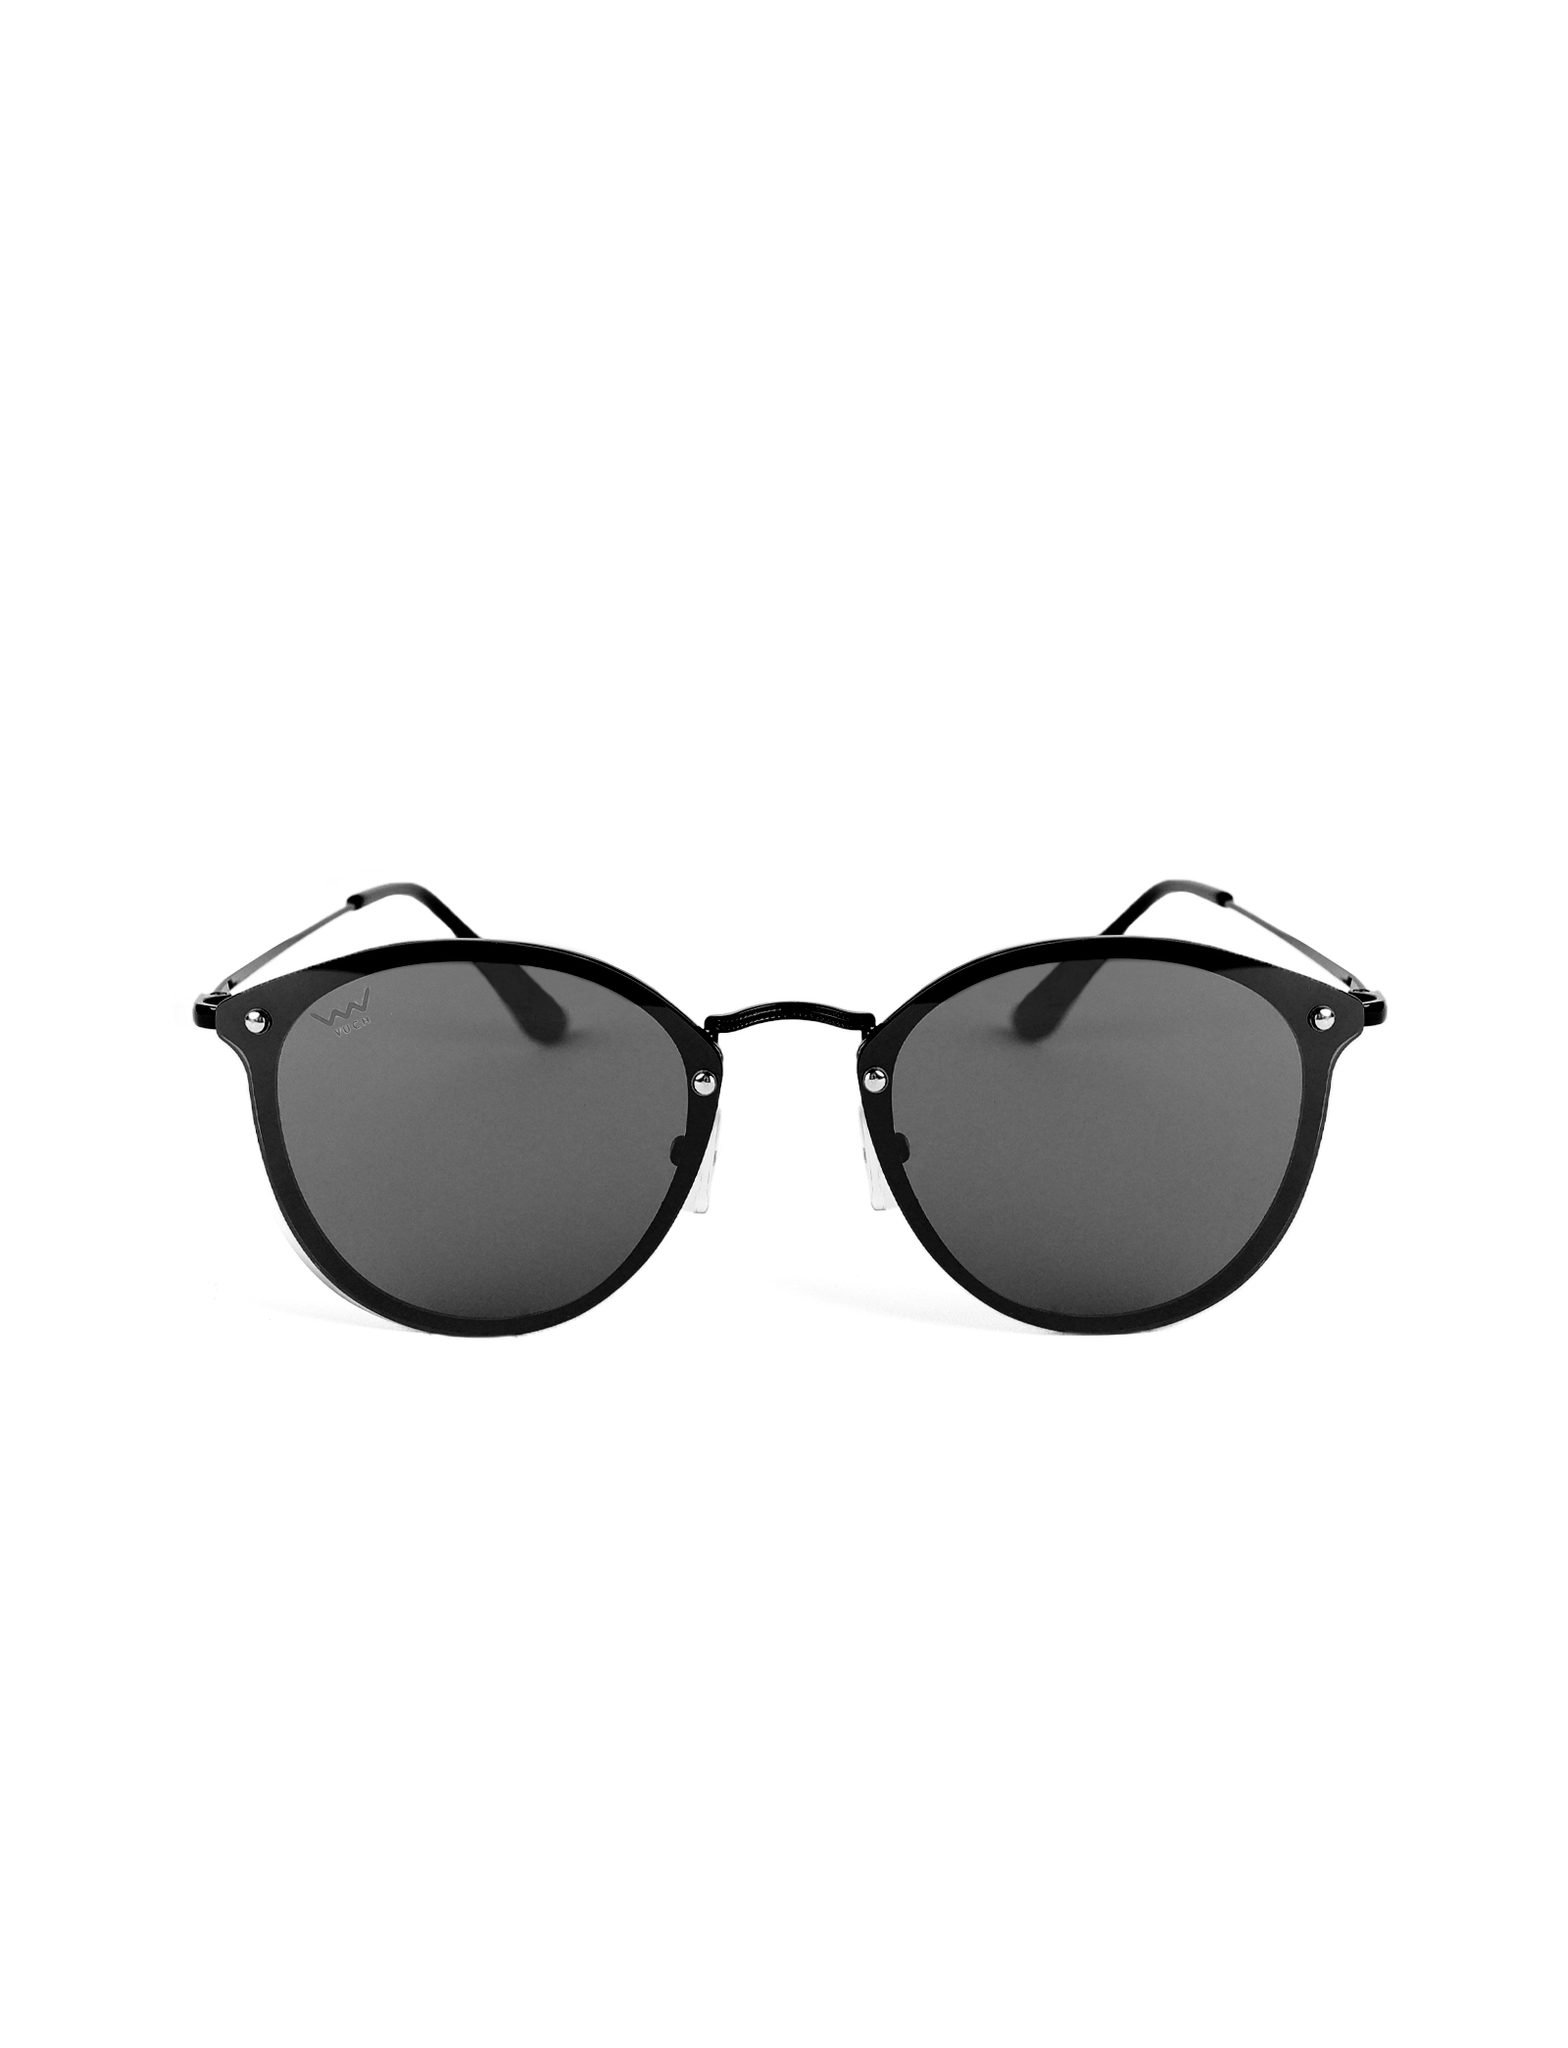 Sunglasses VUCH Lesley Black